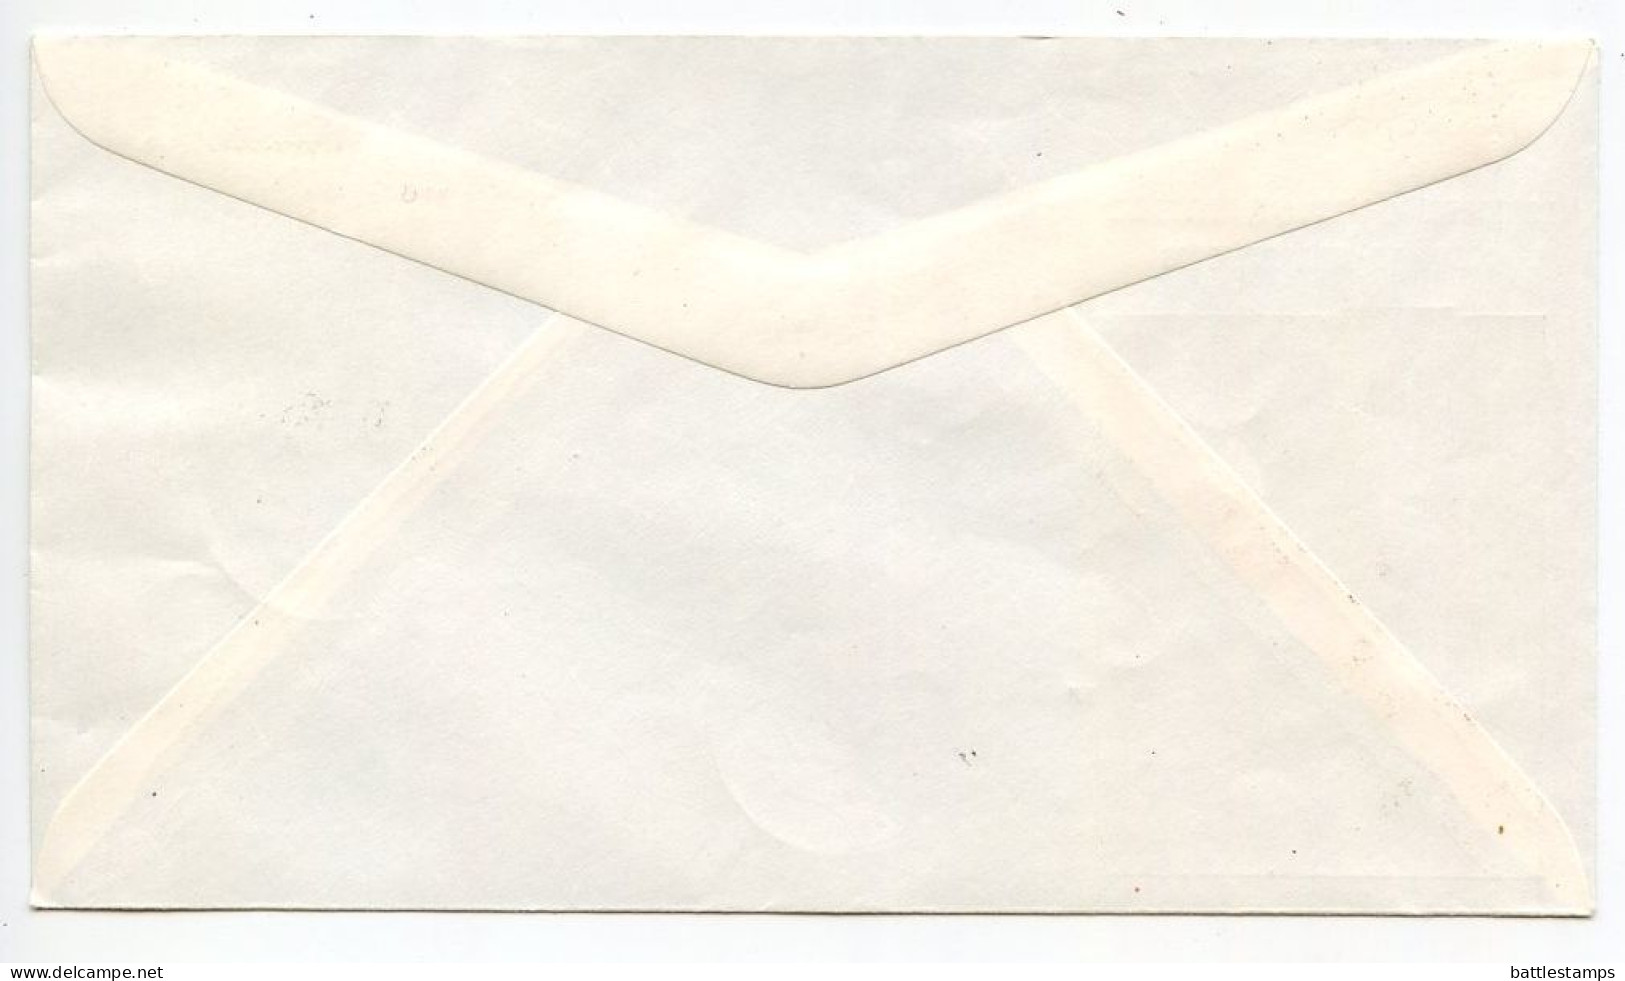 Saar 1959 Commemorative Cover Letzter Gültigkeitstag Für Freimarken / Last Day Of Validity For Postage Stamps - Lettres & Documents